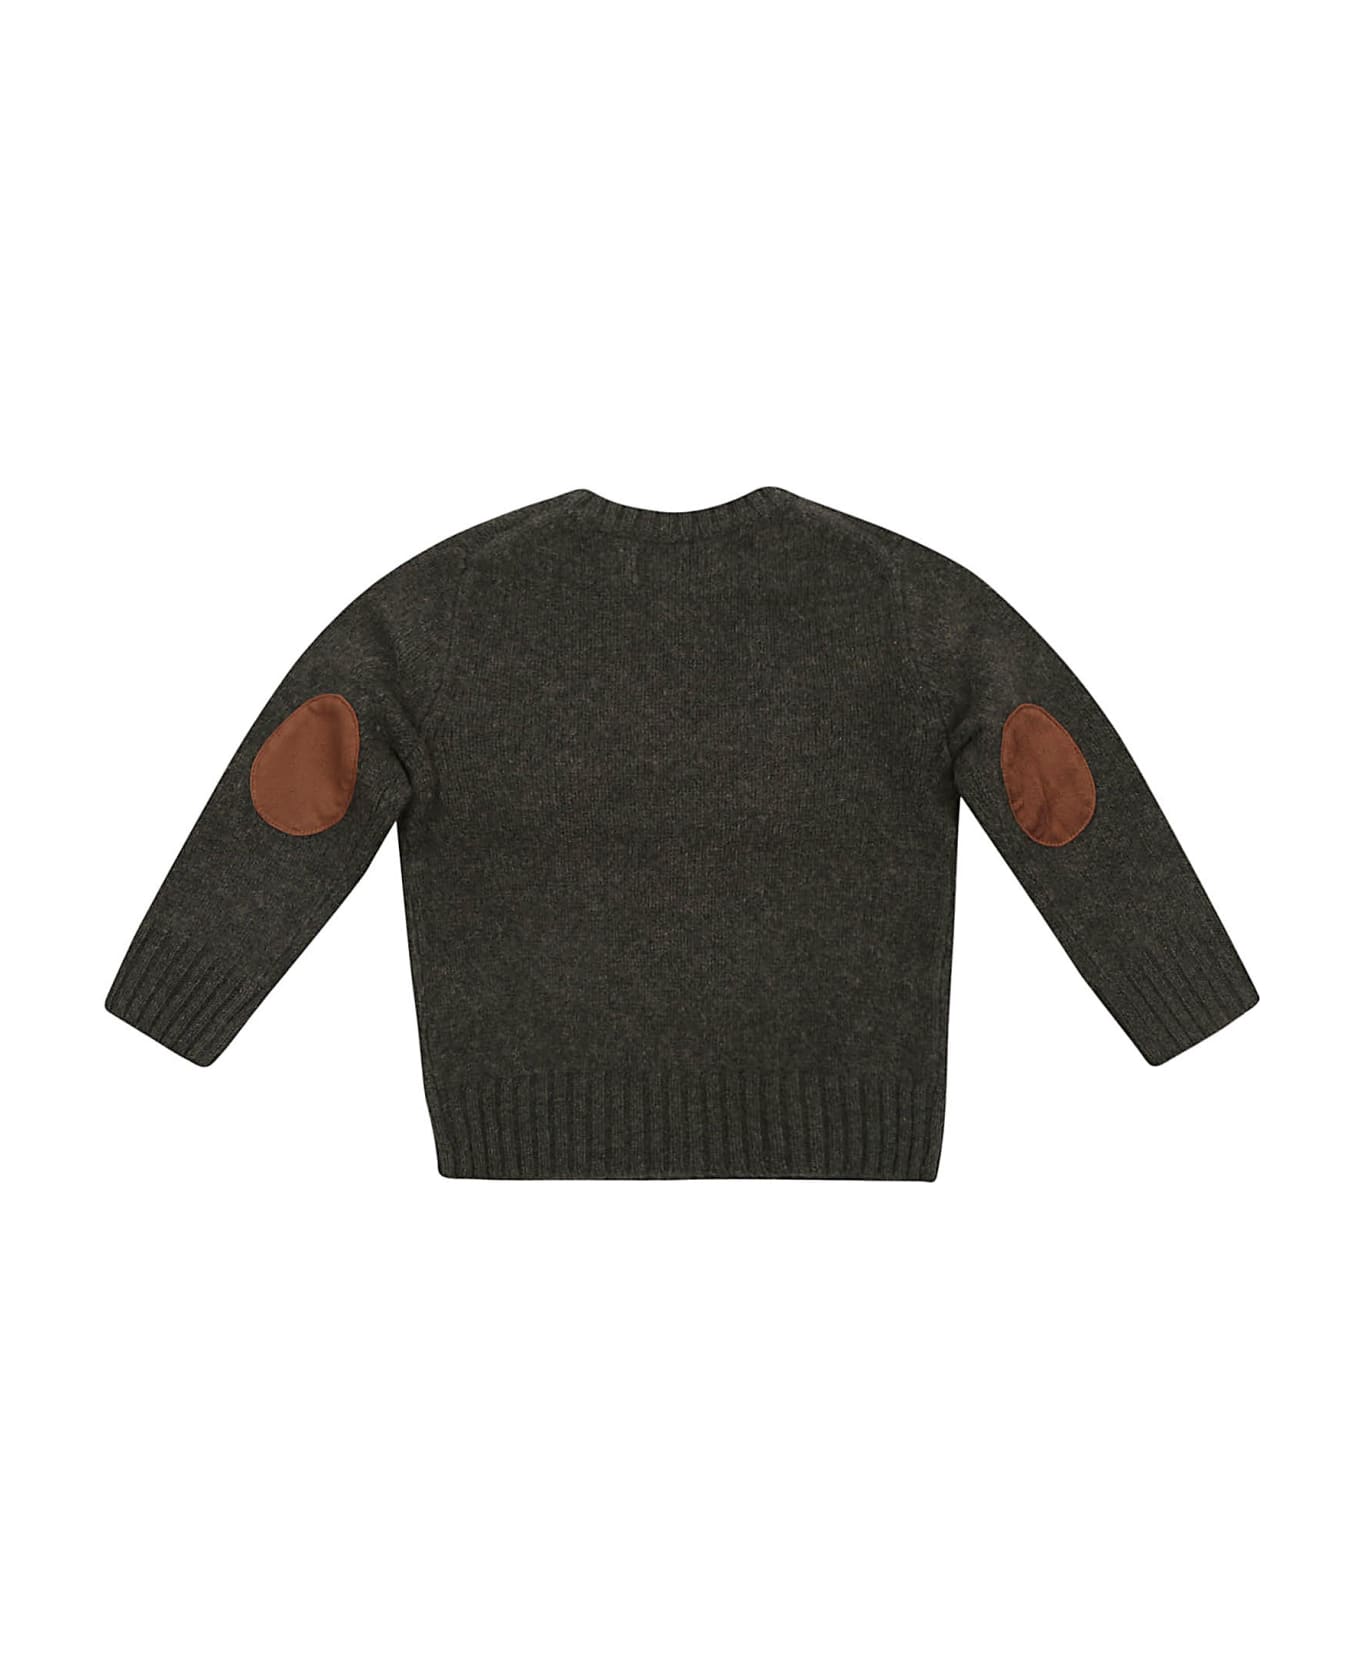 Ralph Lauren Ls Cn-sweater-pullover - Olive Heather